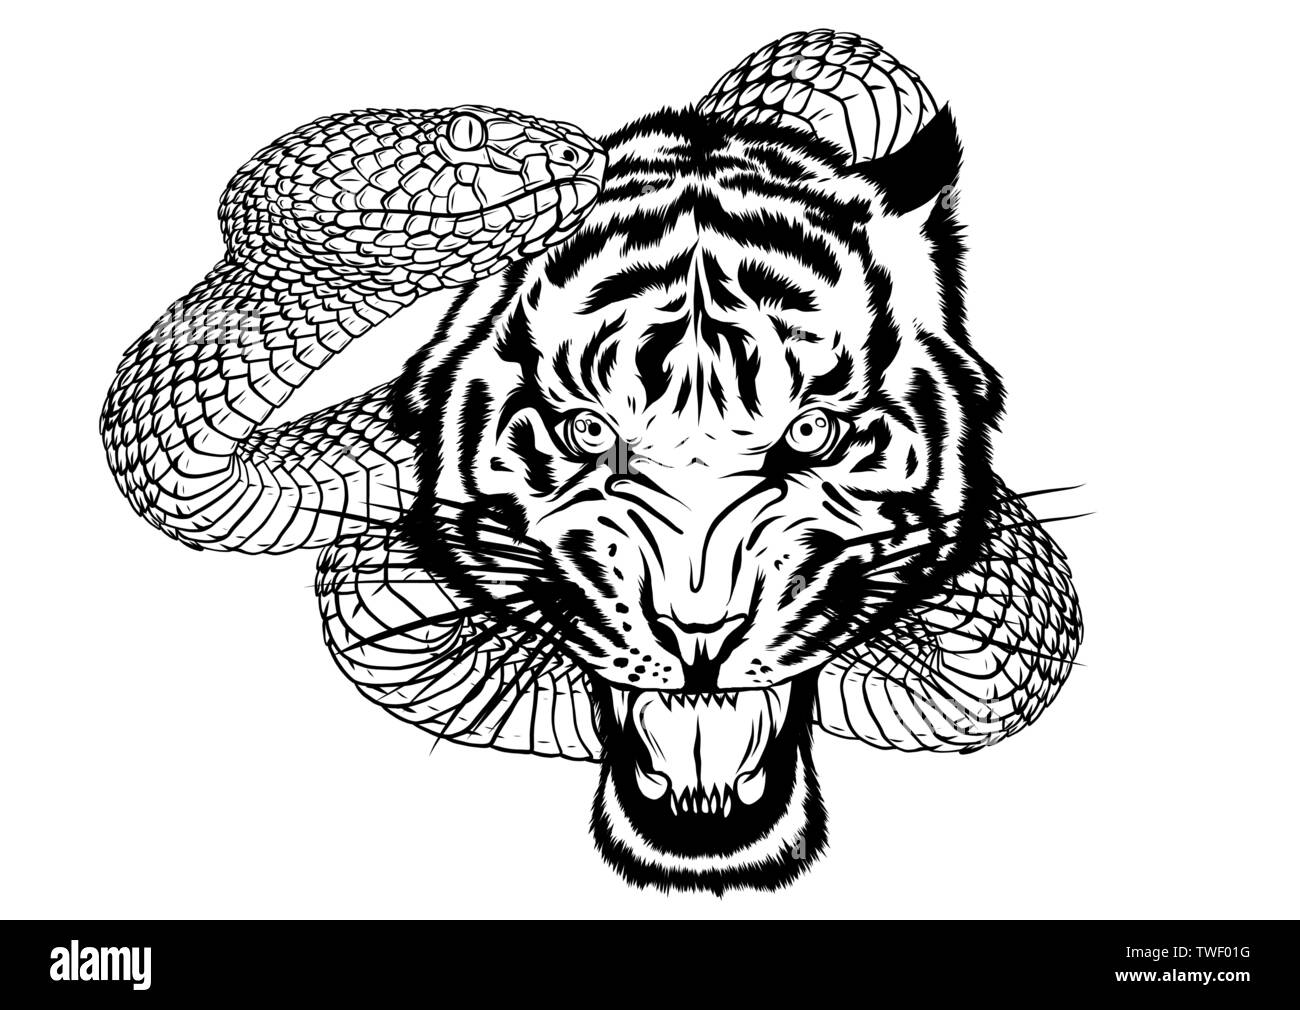 Snake Tiger Fighting Black White Tattoo Stock Vector (Royalty Free)  182666633 | Shutterstock